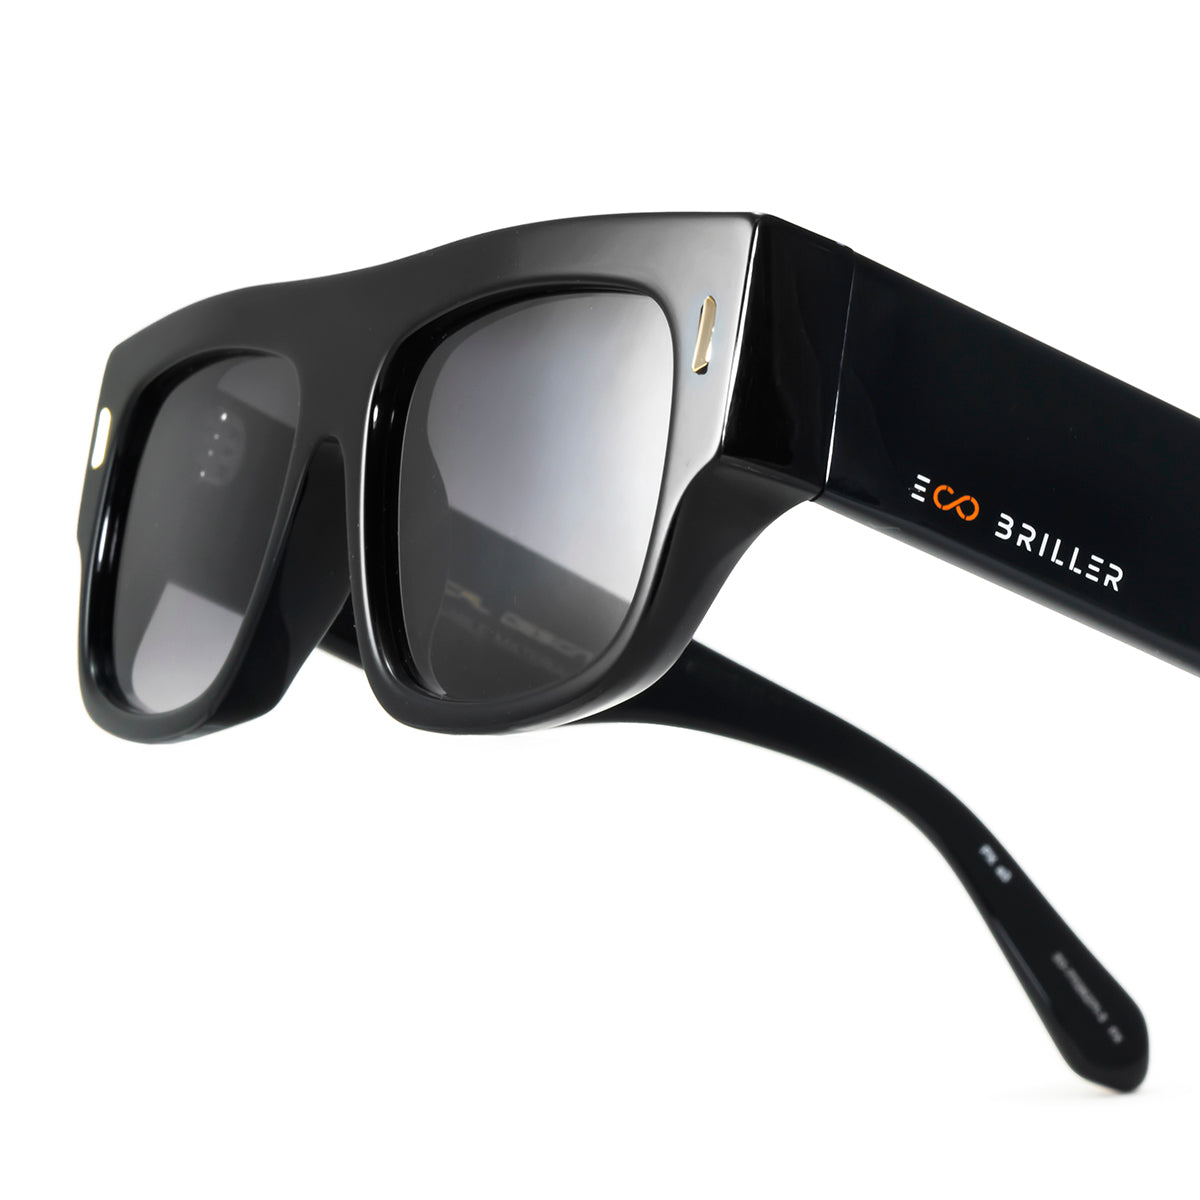 Glasgow Eco Briller - Black Shiny - Smoke Gradient Lens